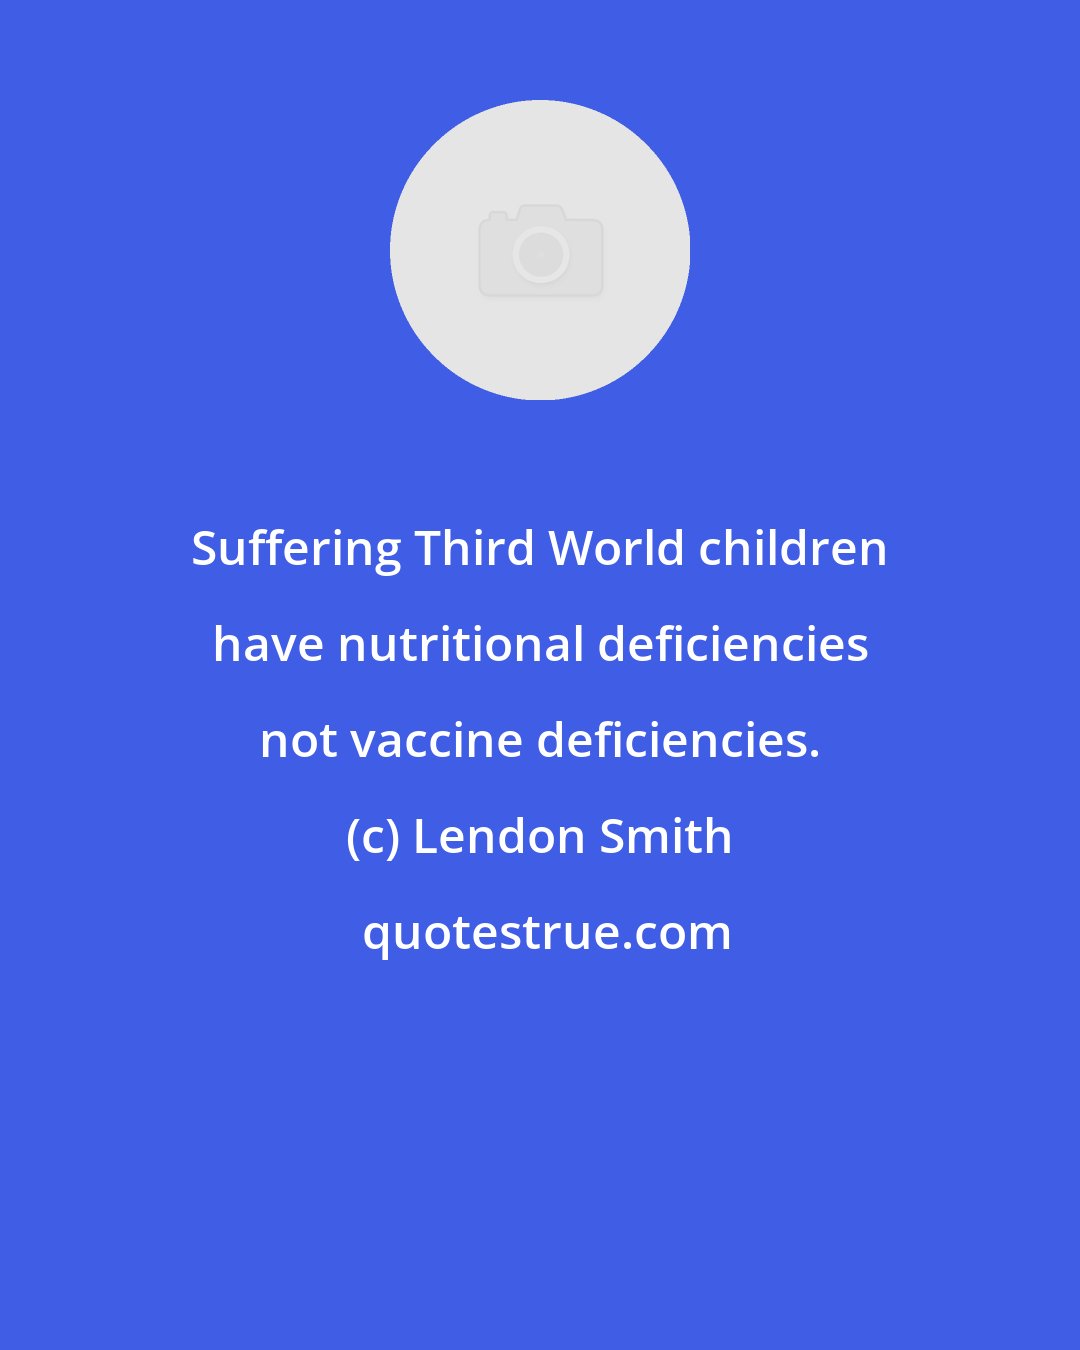 Lendon Smith: Suffering Third World children have nutritional deficiencies not vaccine deficiencies.